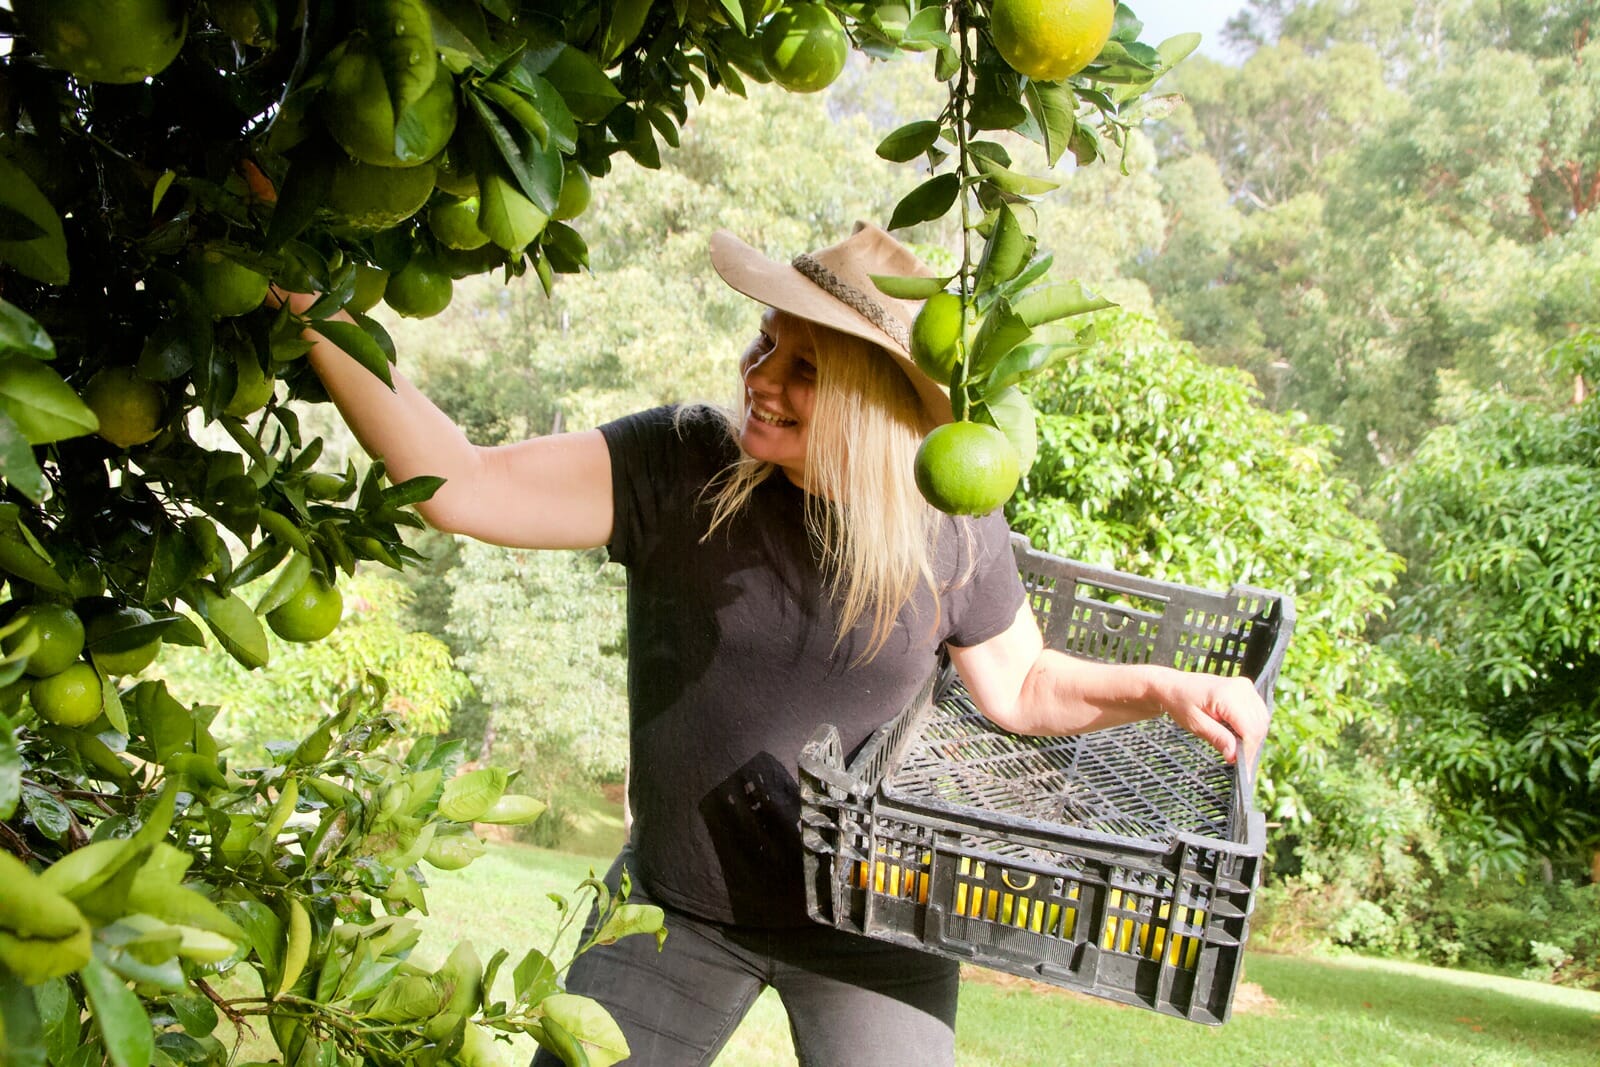 Cheryl picking fresh fruit